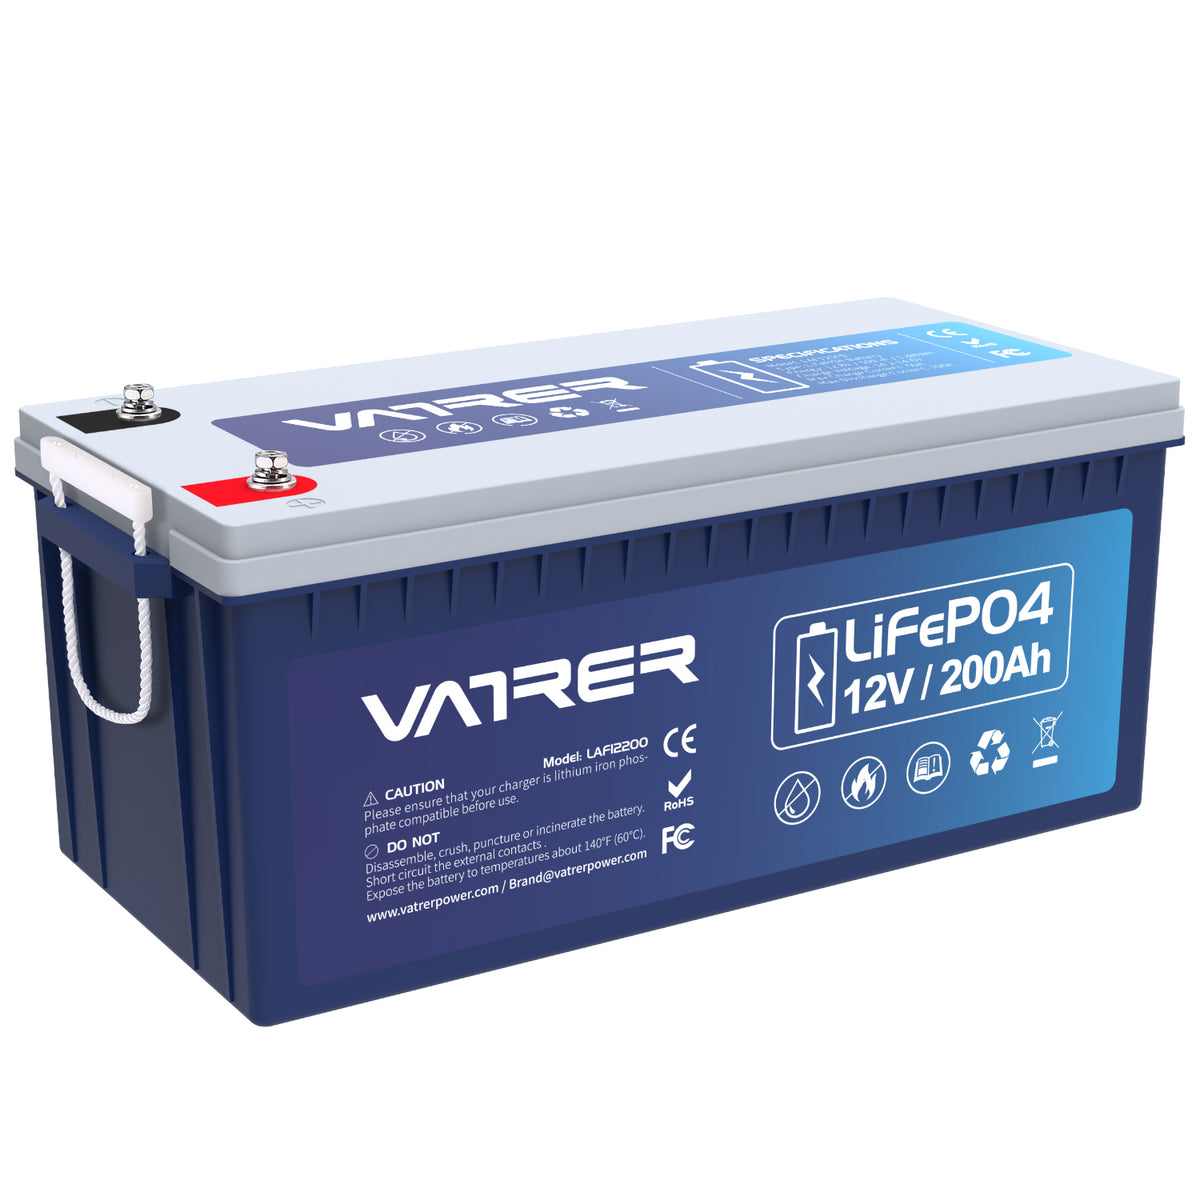 Vatrer 24V 200Ah Lithium Battery, Built-in 200A BMS, 5000+ Cycles -  Lo-Vatrer